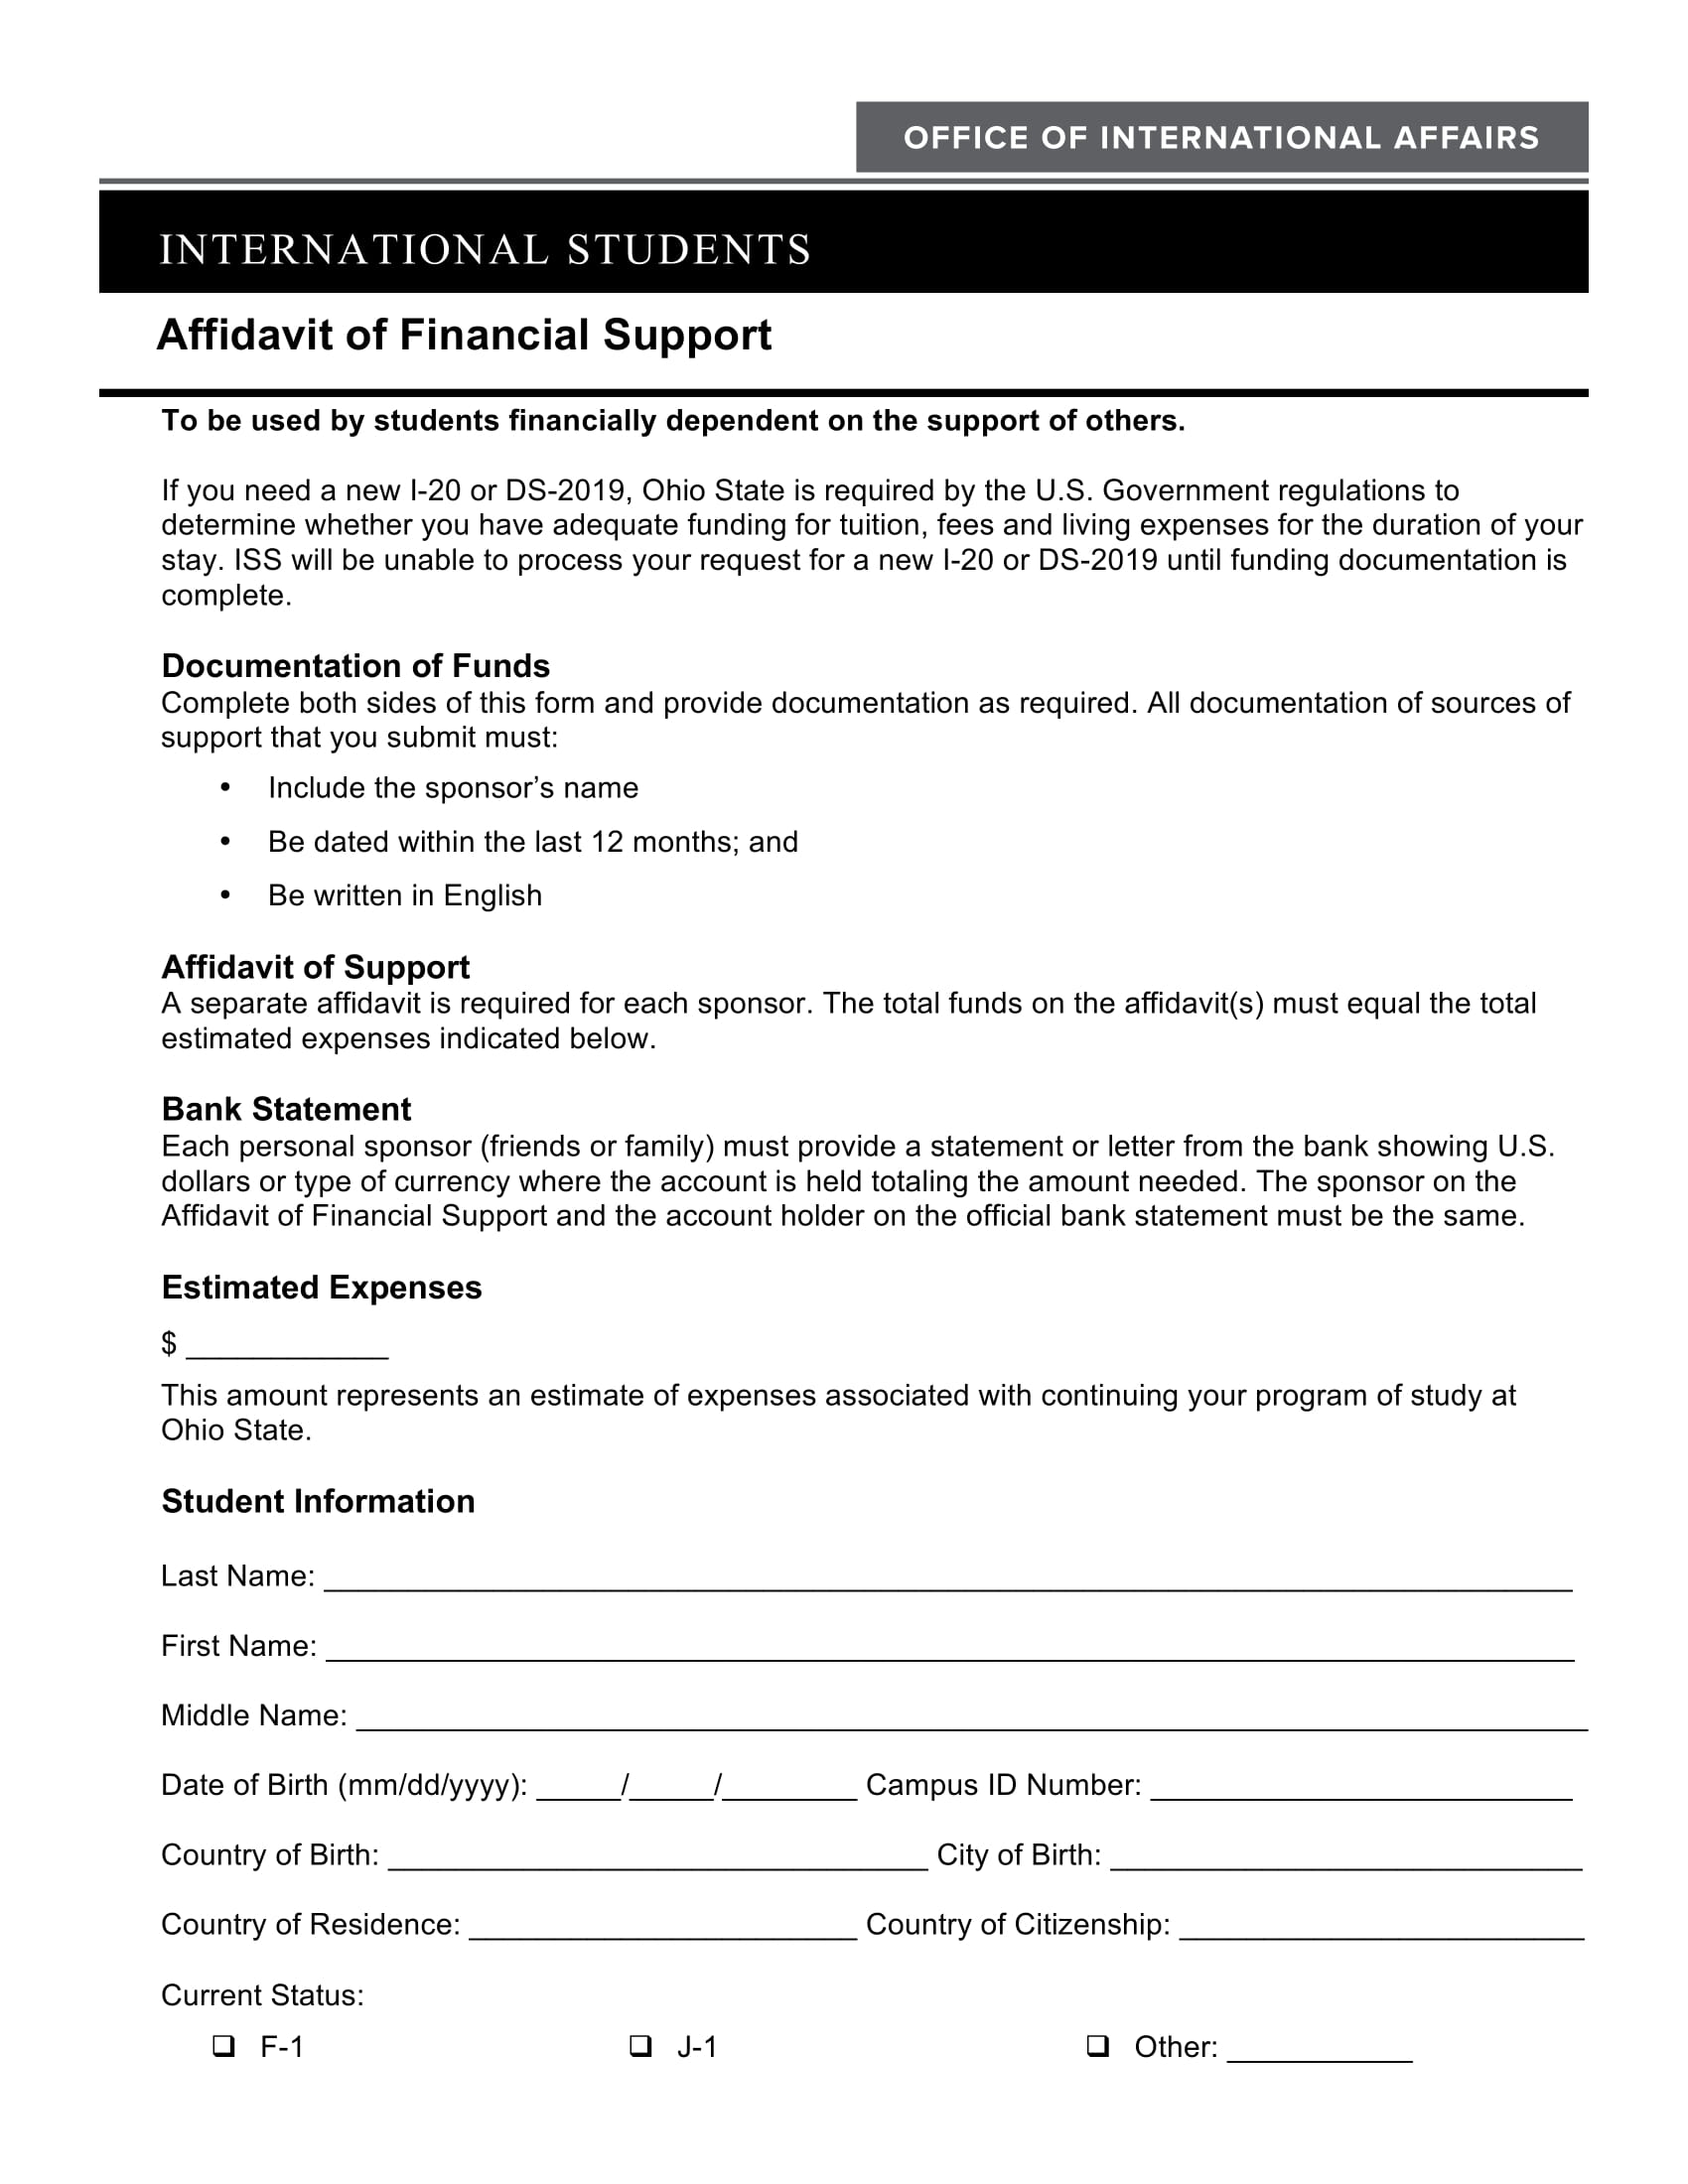 affidavit of financial support intl affairs